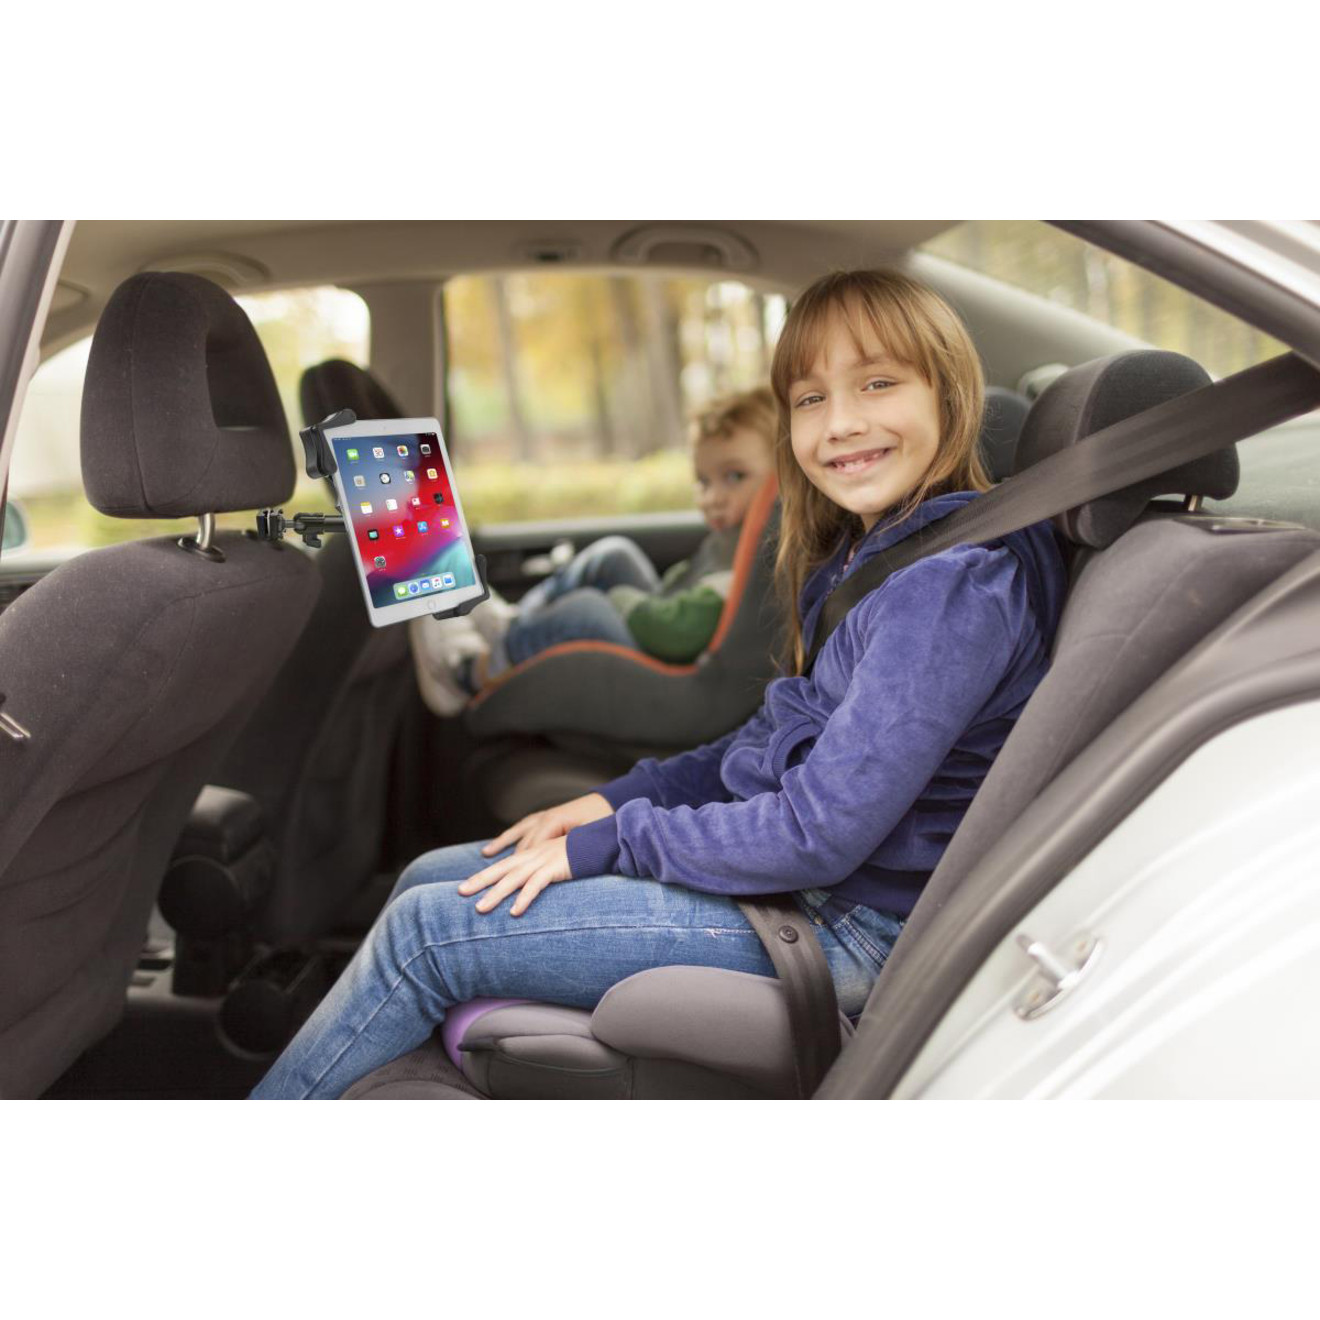 Cta Digital Accessories Vehicle Mount for Tablet, iPad mini, iPad, iPad Air, iPad Pro14″ Screen Support1 AUT-VHFM